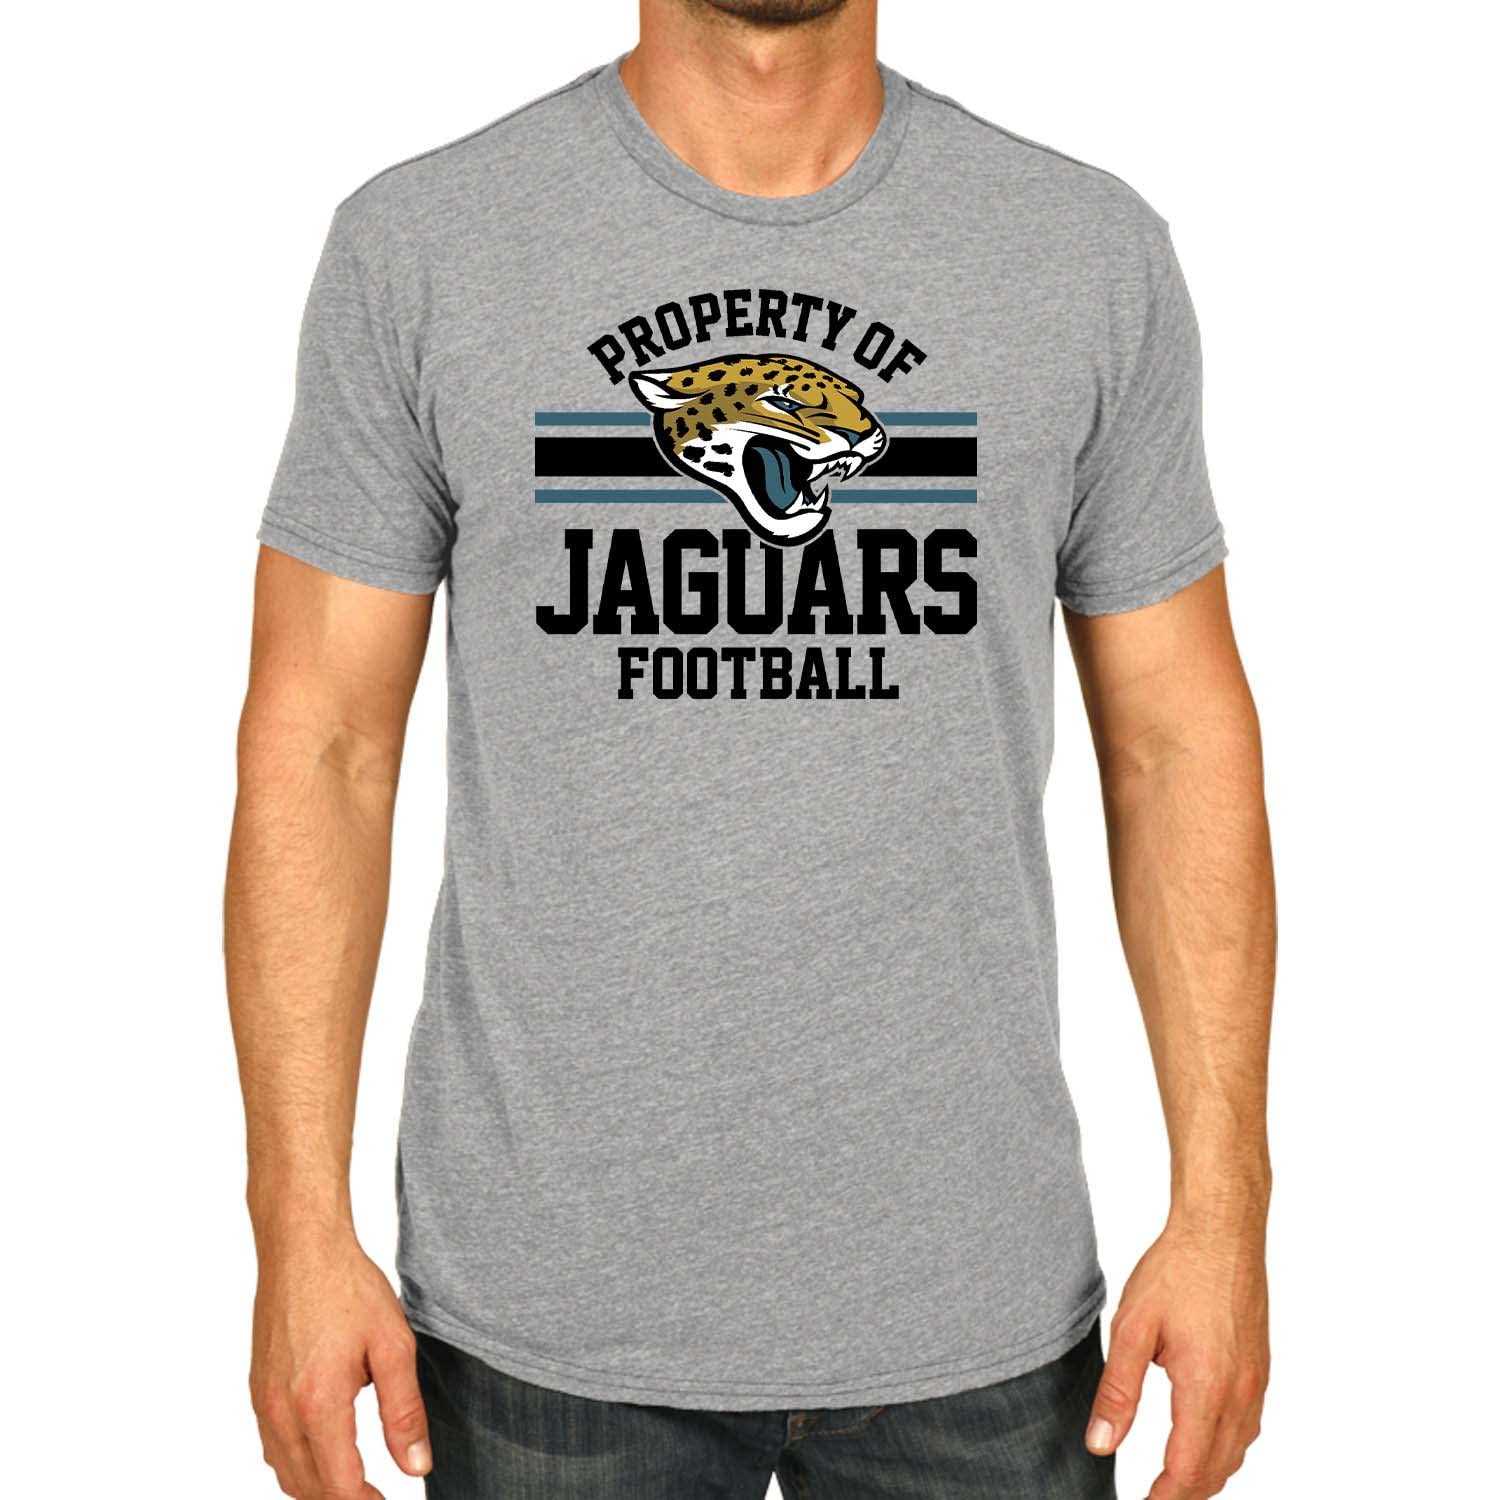 jacksonville jaguars men's apparel